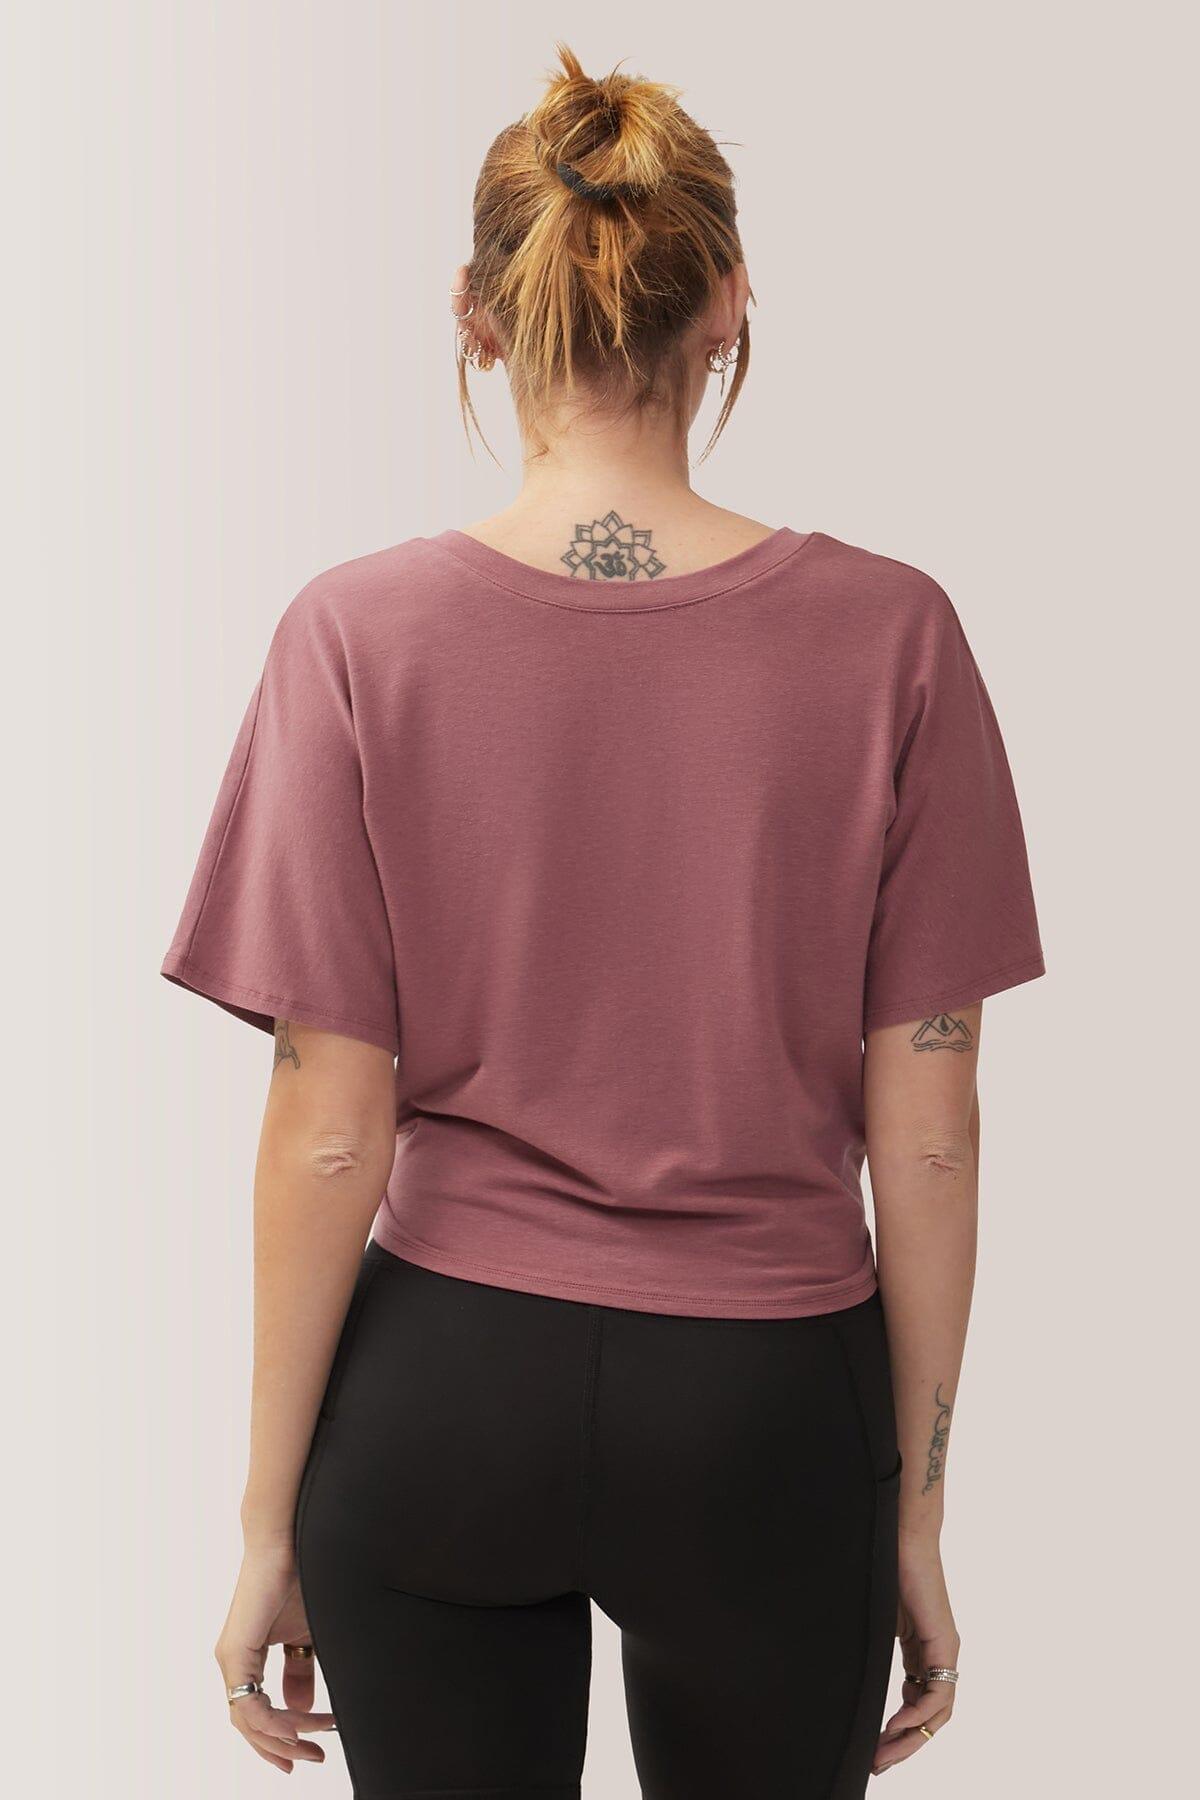 Femme qui porte le t-shirt Jasper de Rose Boreal./ Women wearing the Jasper T-Shirt by Rose Boreal. -Goddess